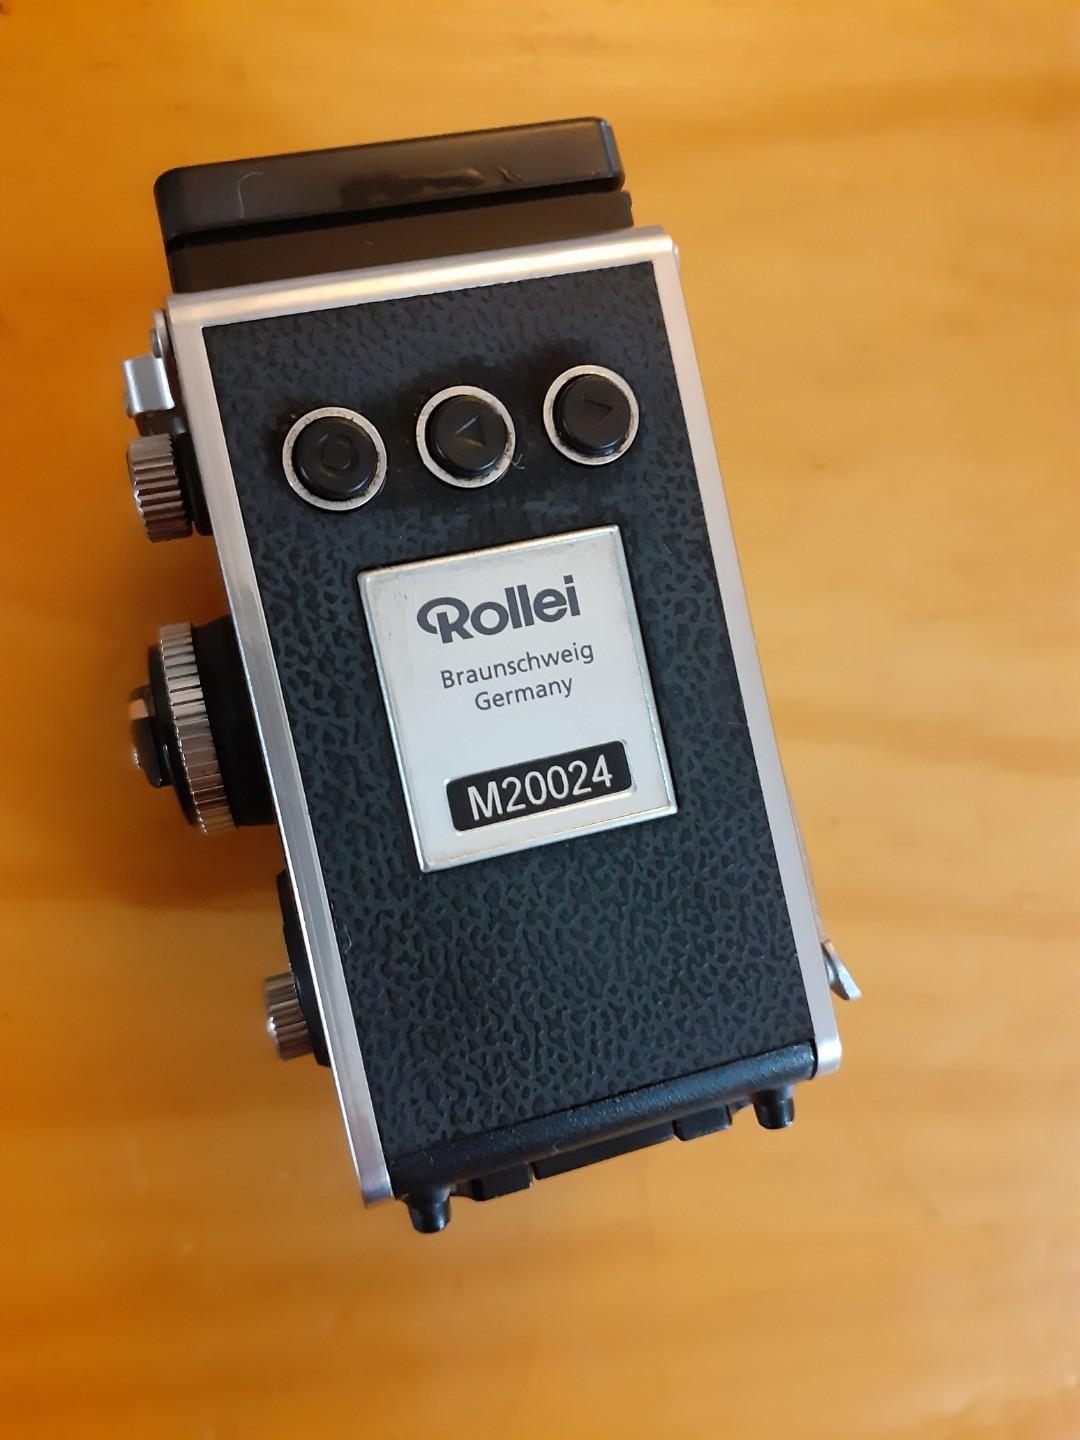 RolleiFlex MiniDigi Digital Camera, 攝影器材, 相機- Carousell